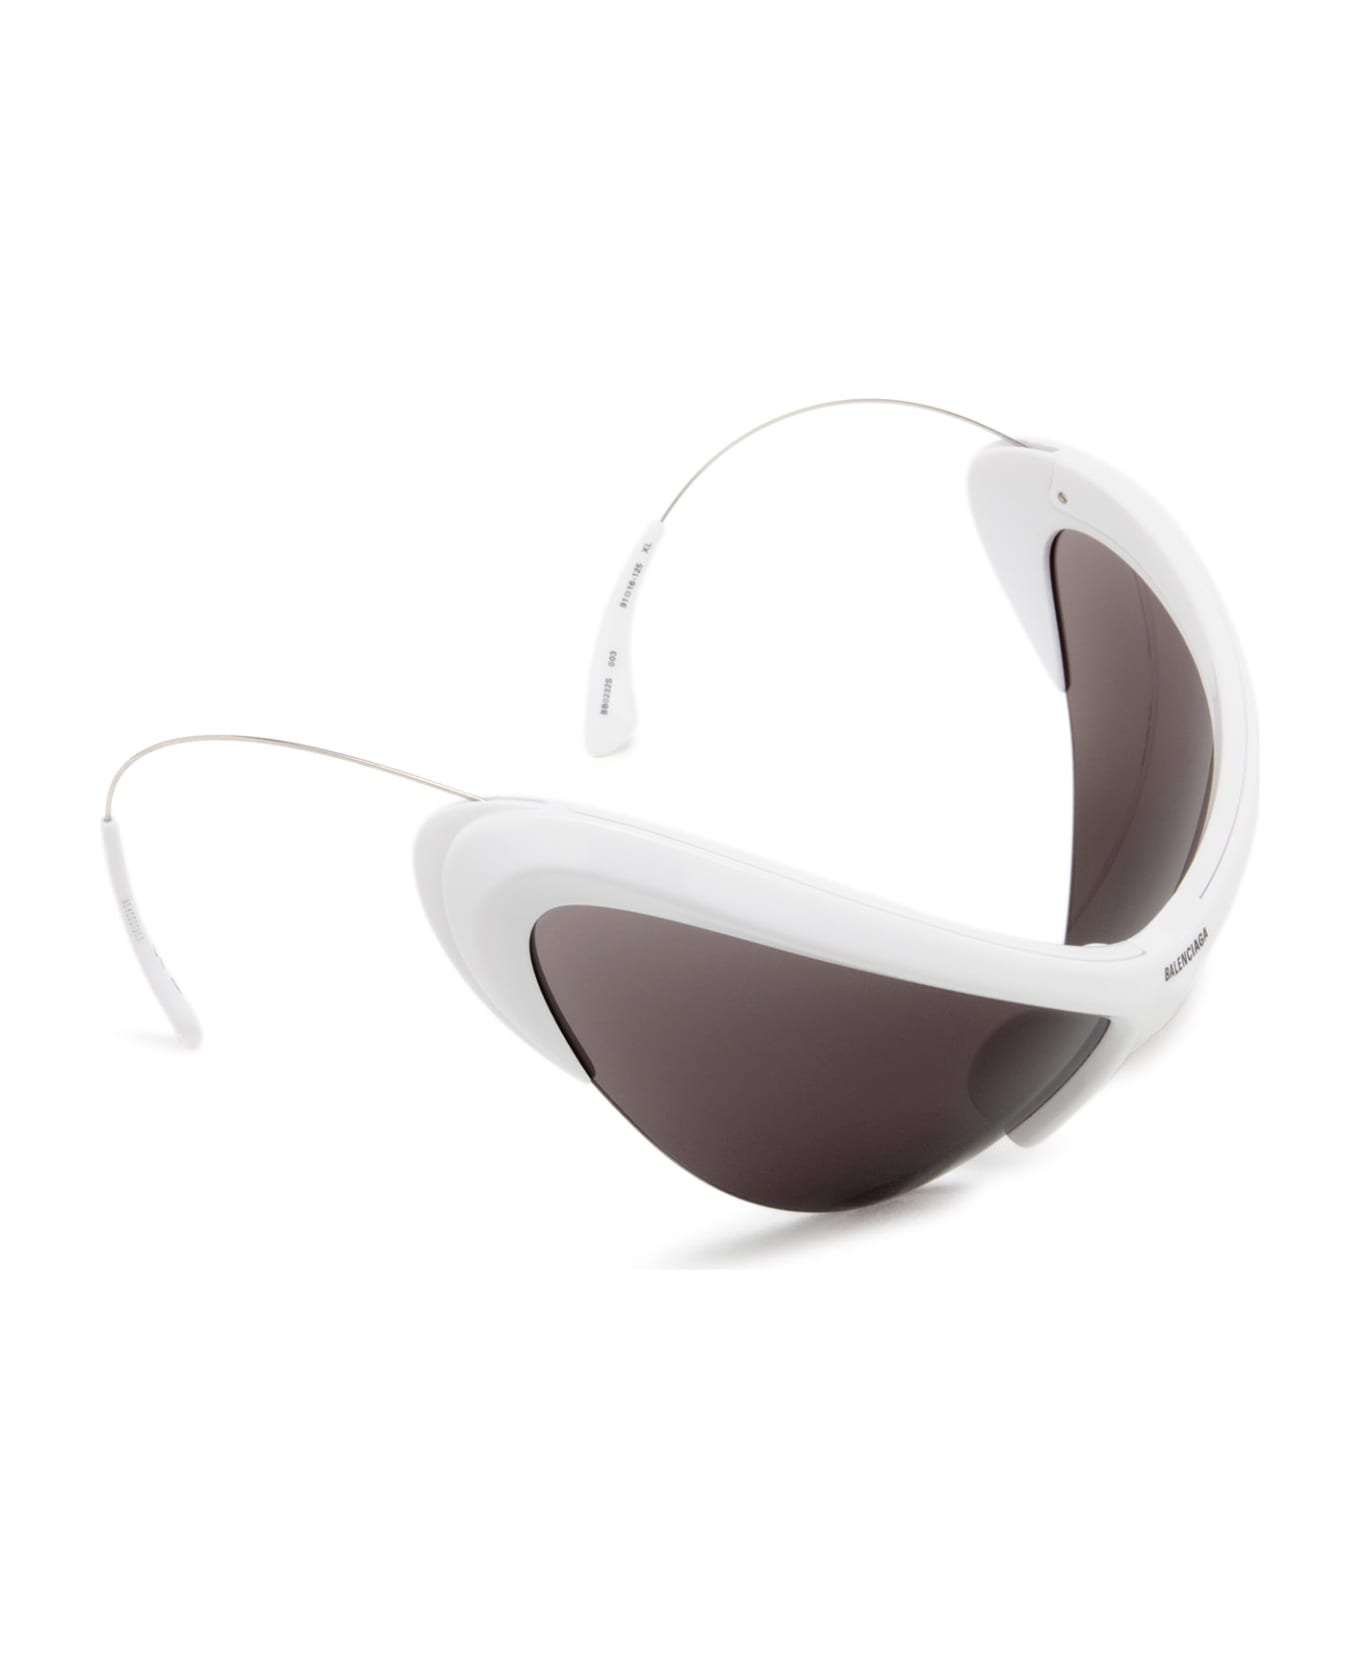 Balenciaga Eyewear Bb0232s White Sunglasses Frameless - White